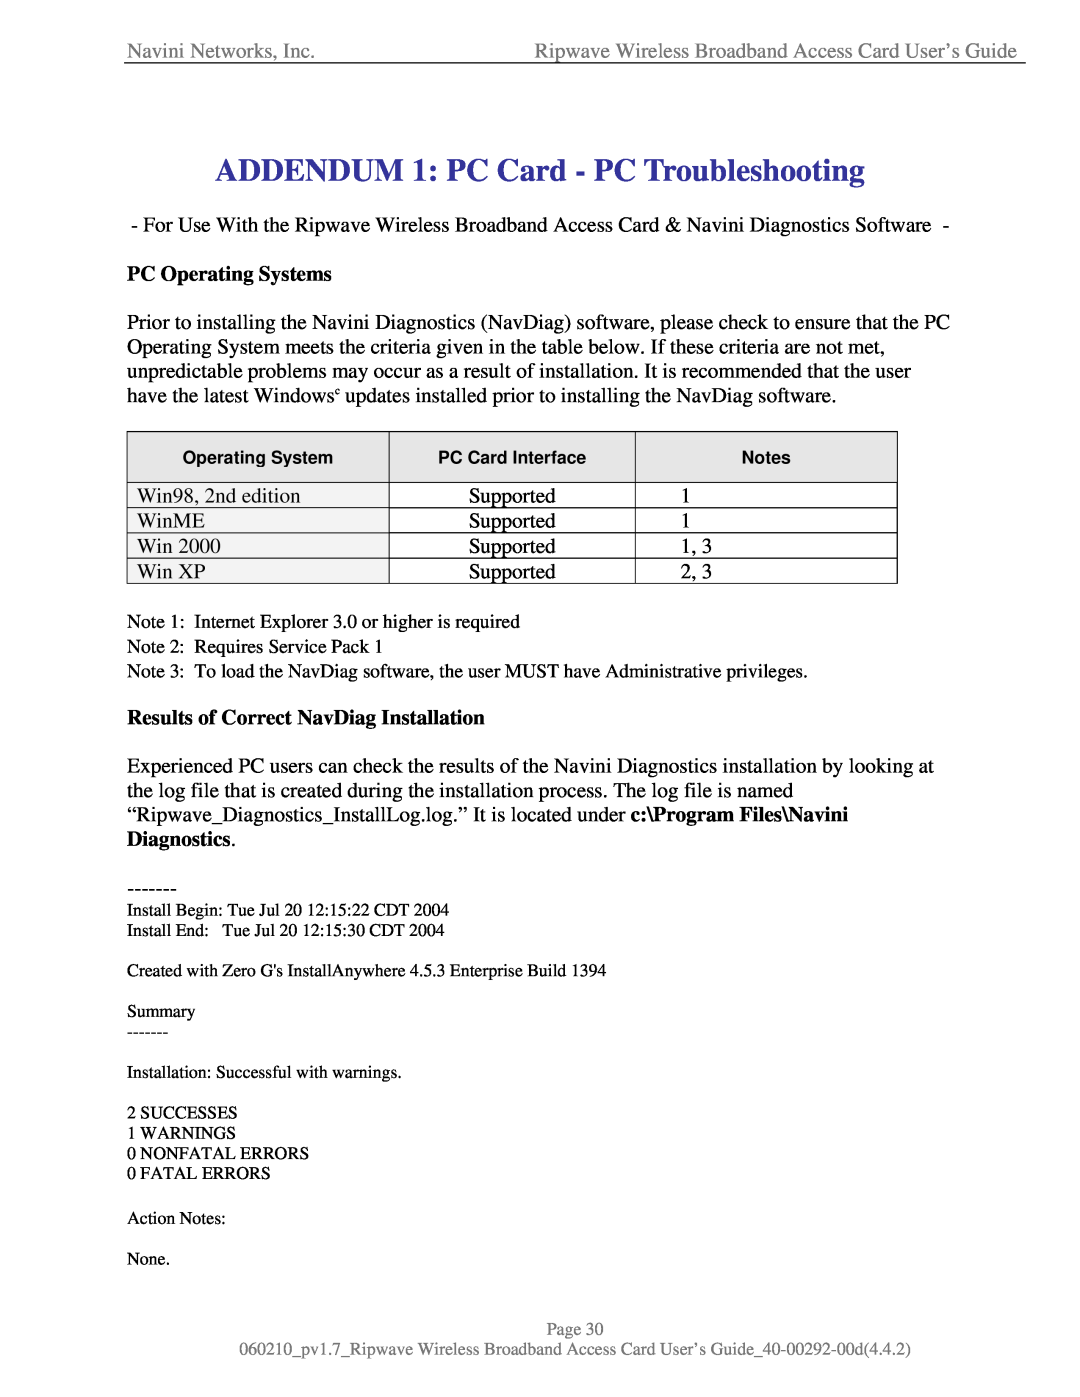 Navini Networks 40-00292-00 manual ADDENDUM 1 PC Card - PC Troubleshooting, PC Operating Systems, Navini Networks, Inc 